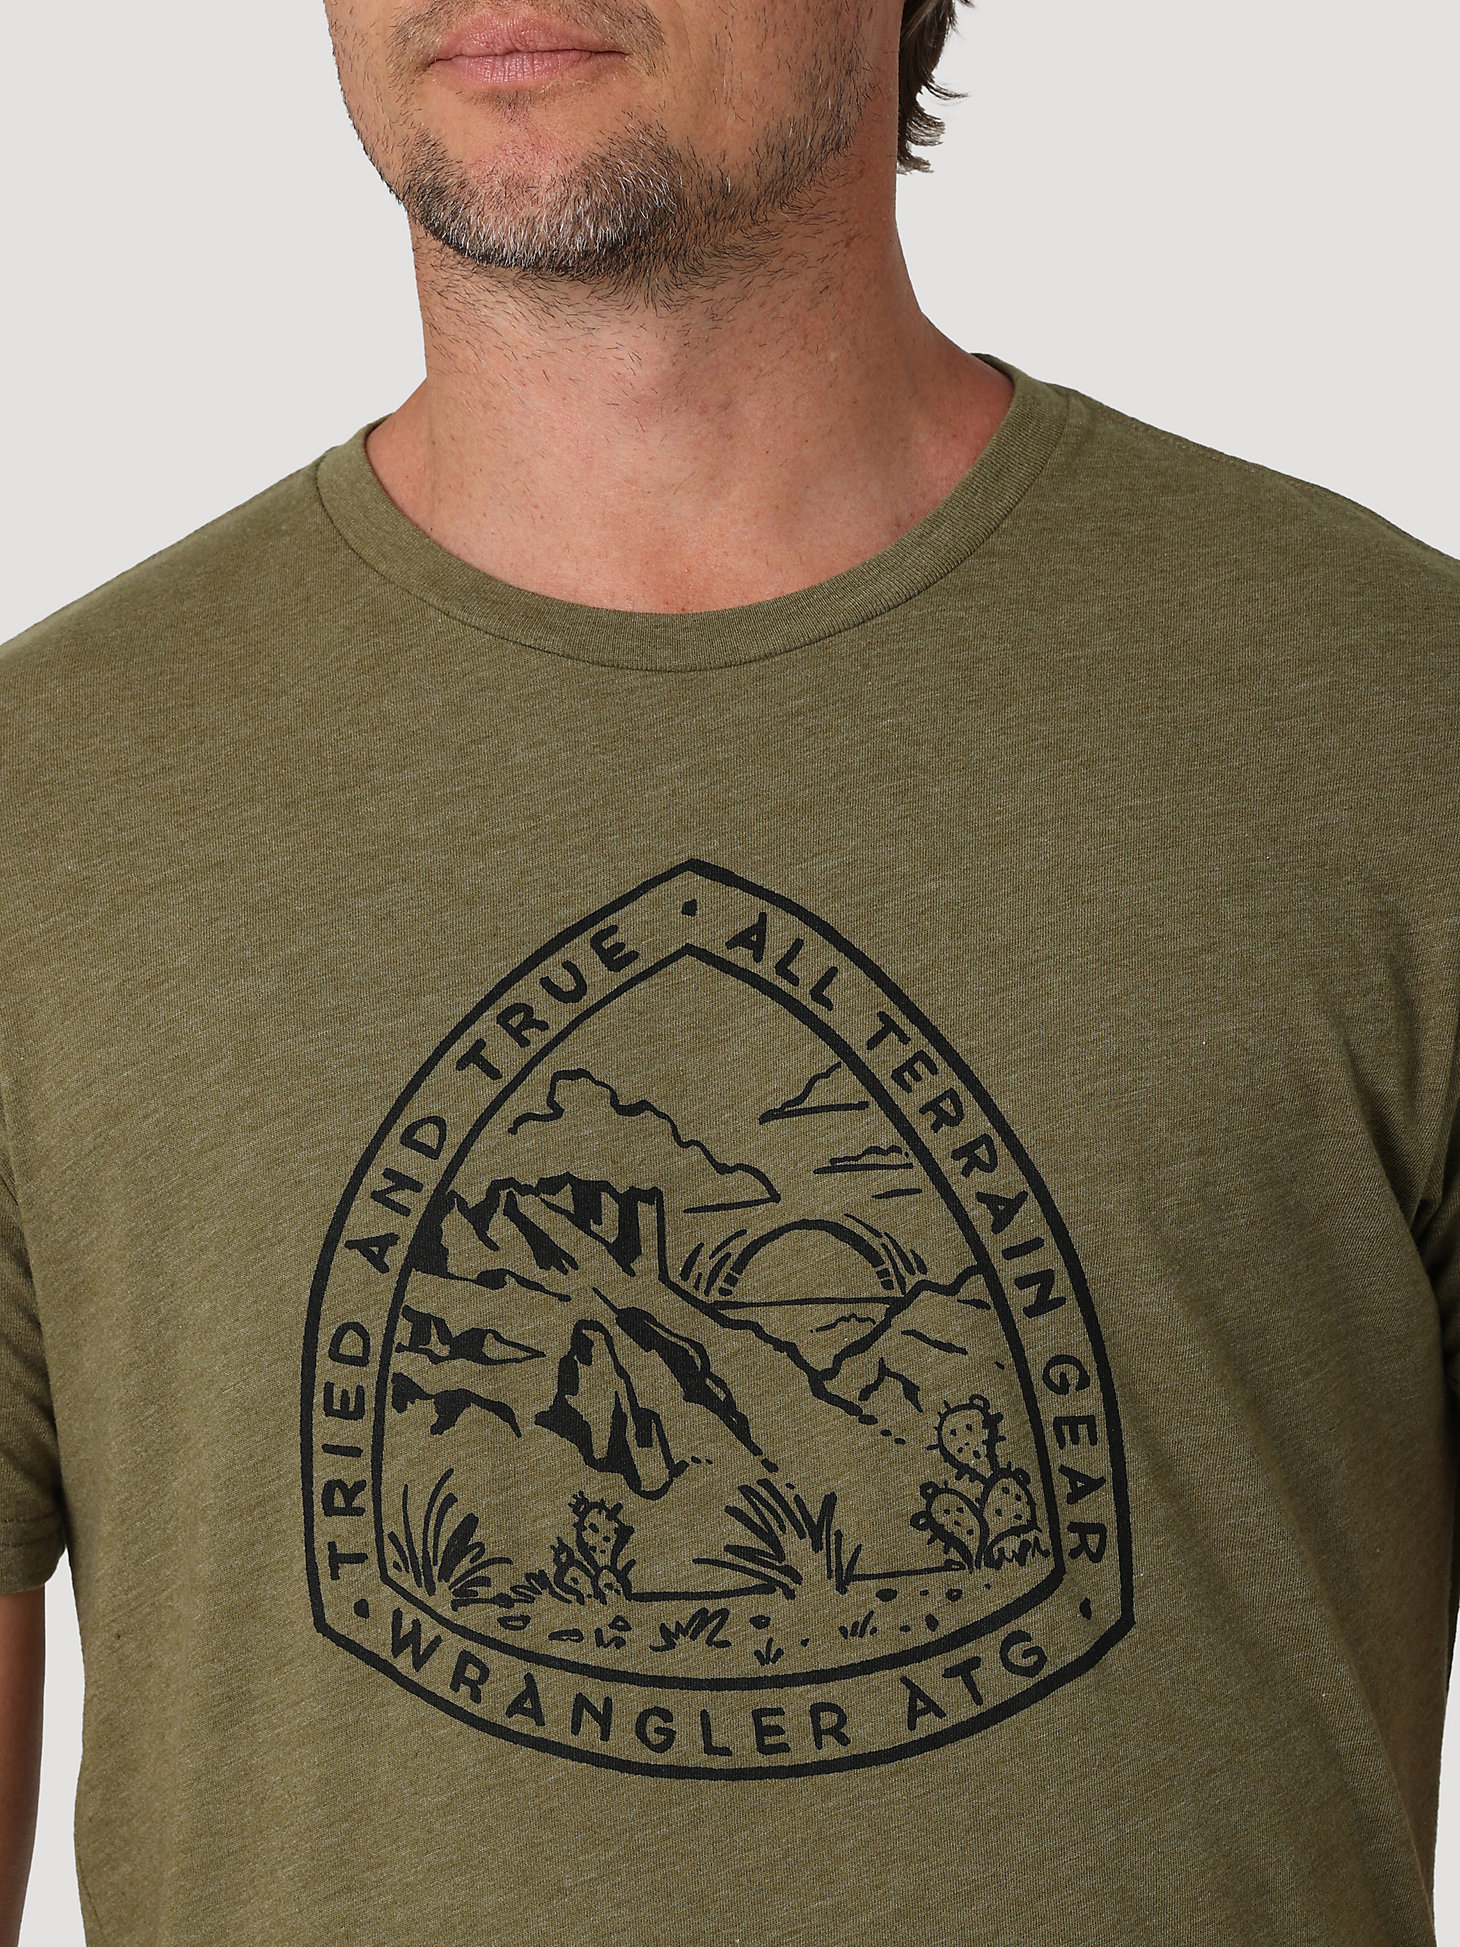 ATG By Wrangler™ Men's Graphic T-Shirt in Capulet Olive alternative view 1